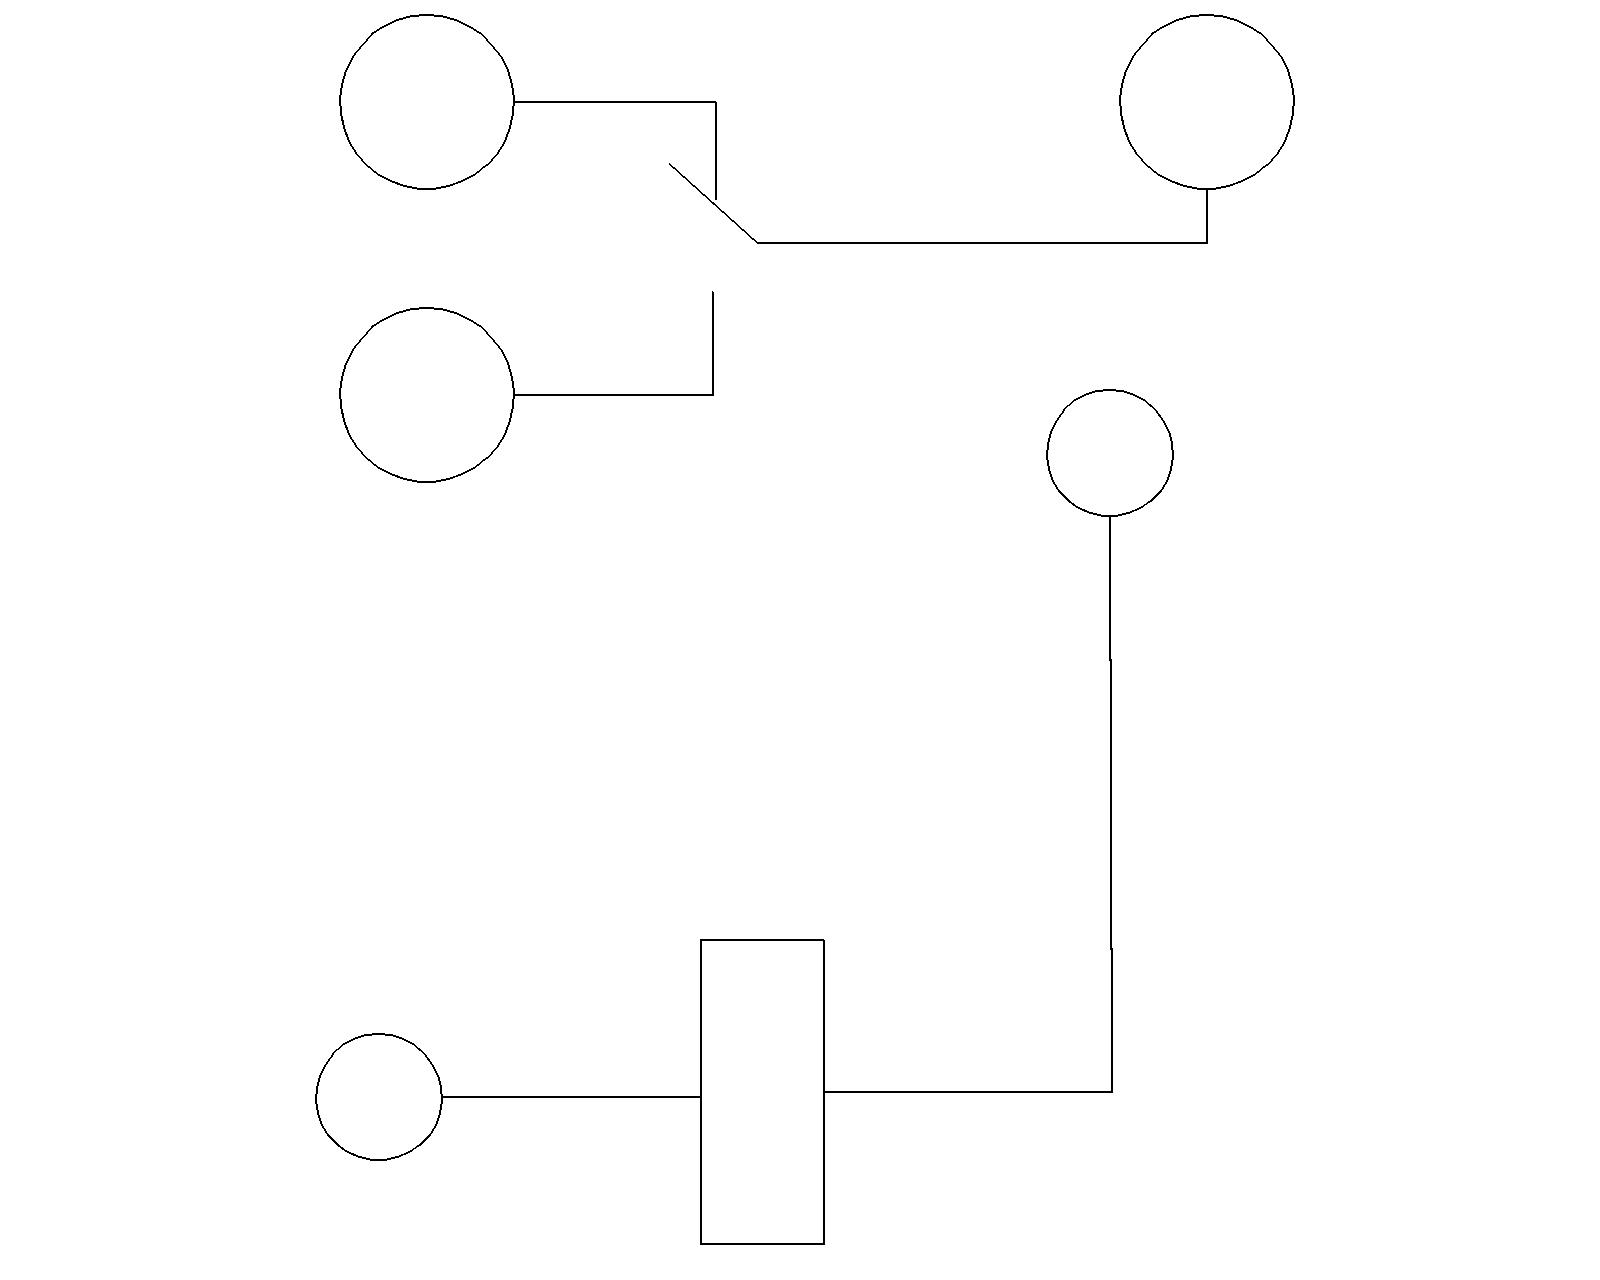 MKC wiring diagram